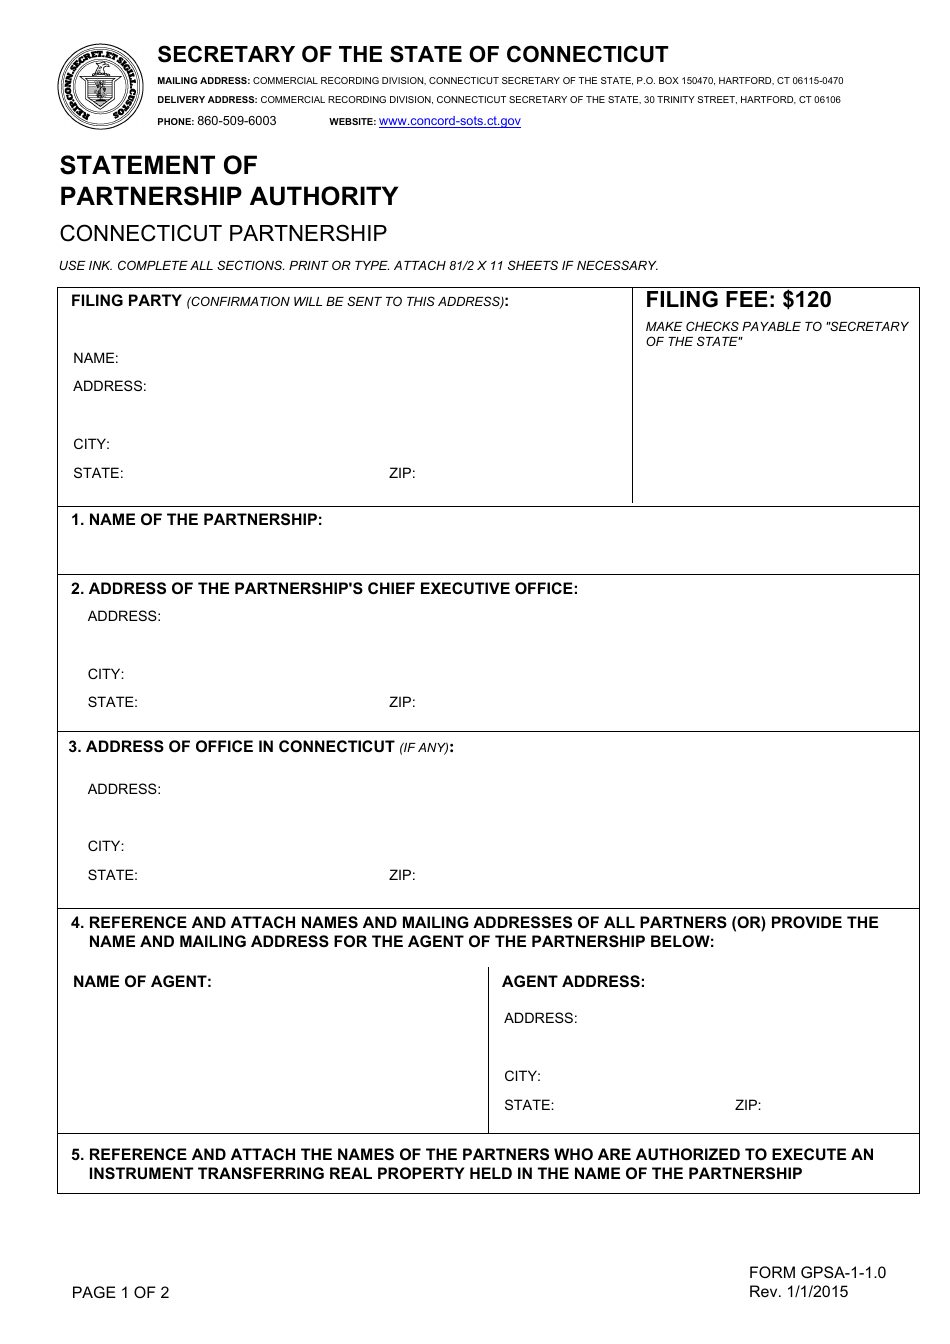 Form GPSA-1-1.0 Statement of Partnership Authority - Connecticut Partnership - Connecticut, Page 1